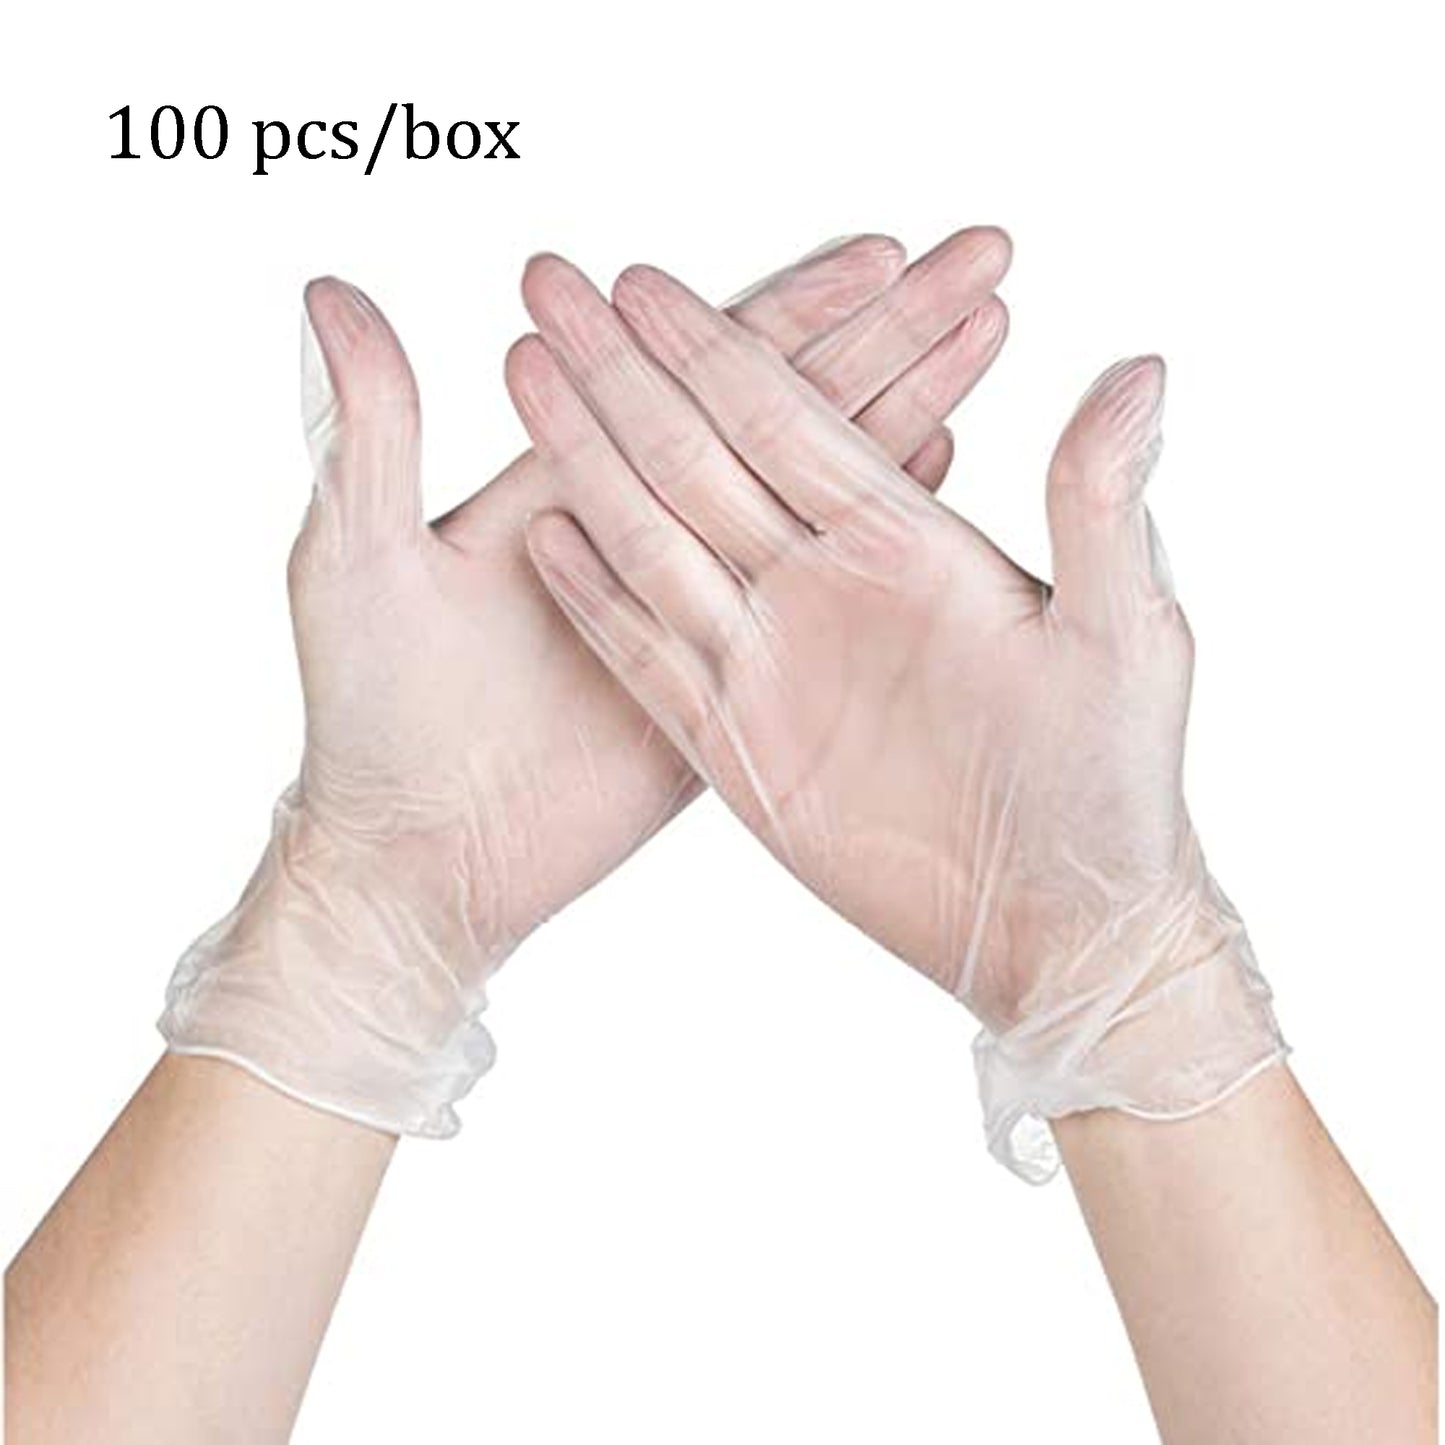 Disposable Vinyl Gloves (1 Box)